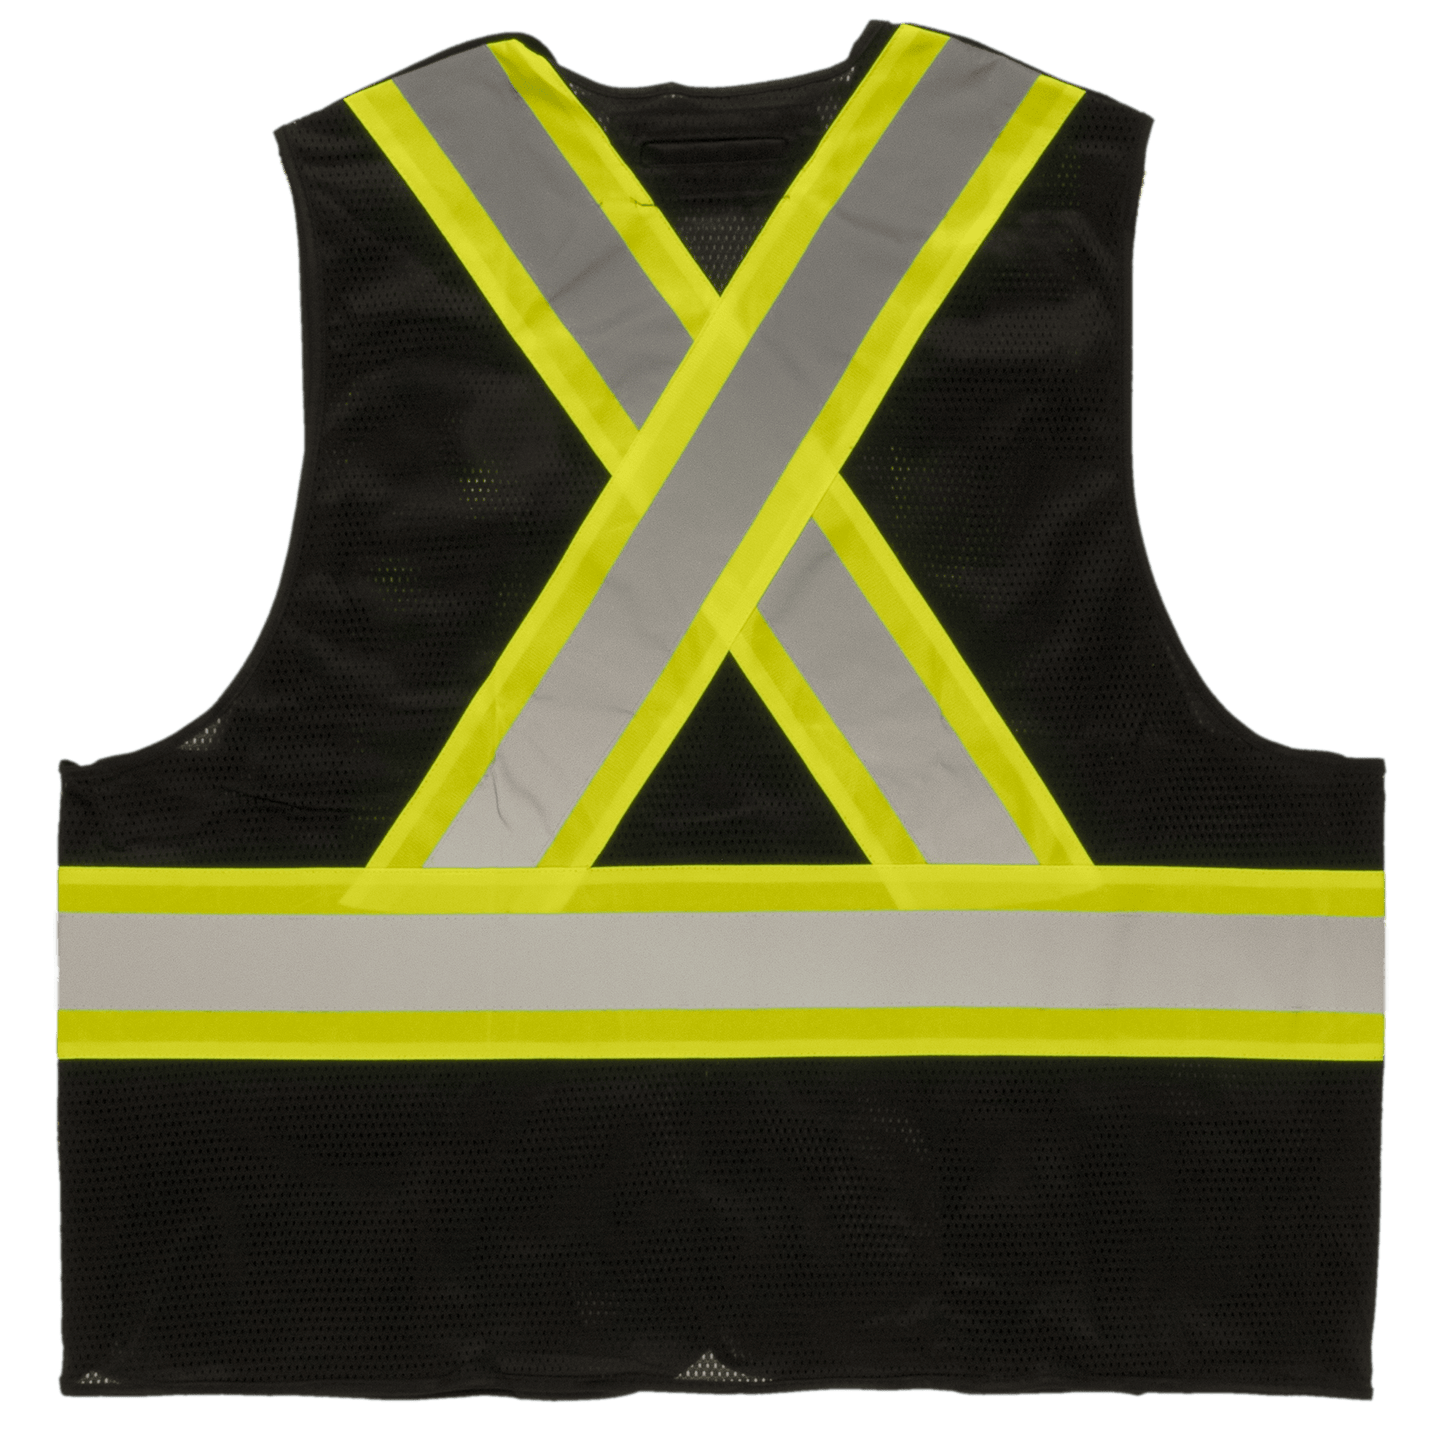 Tough Duck 5-Point Tearaway Safety Vest - S9i0 - Black - back